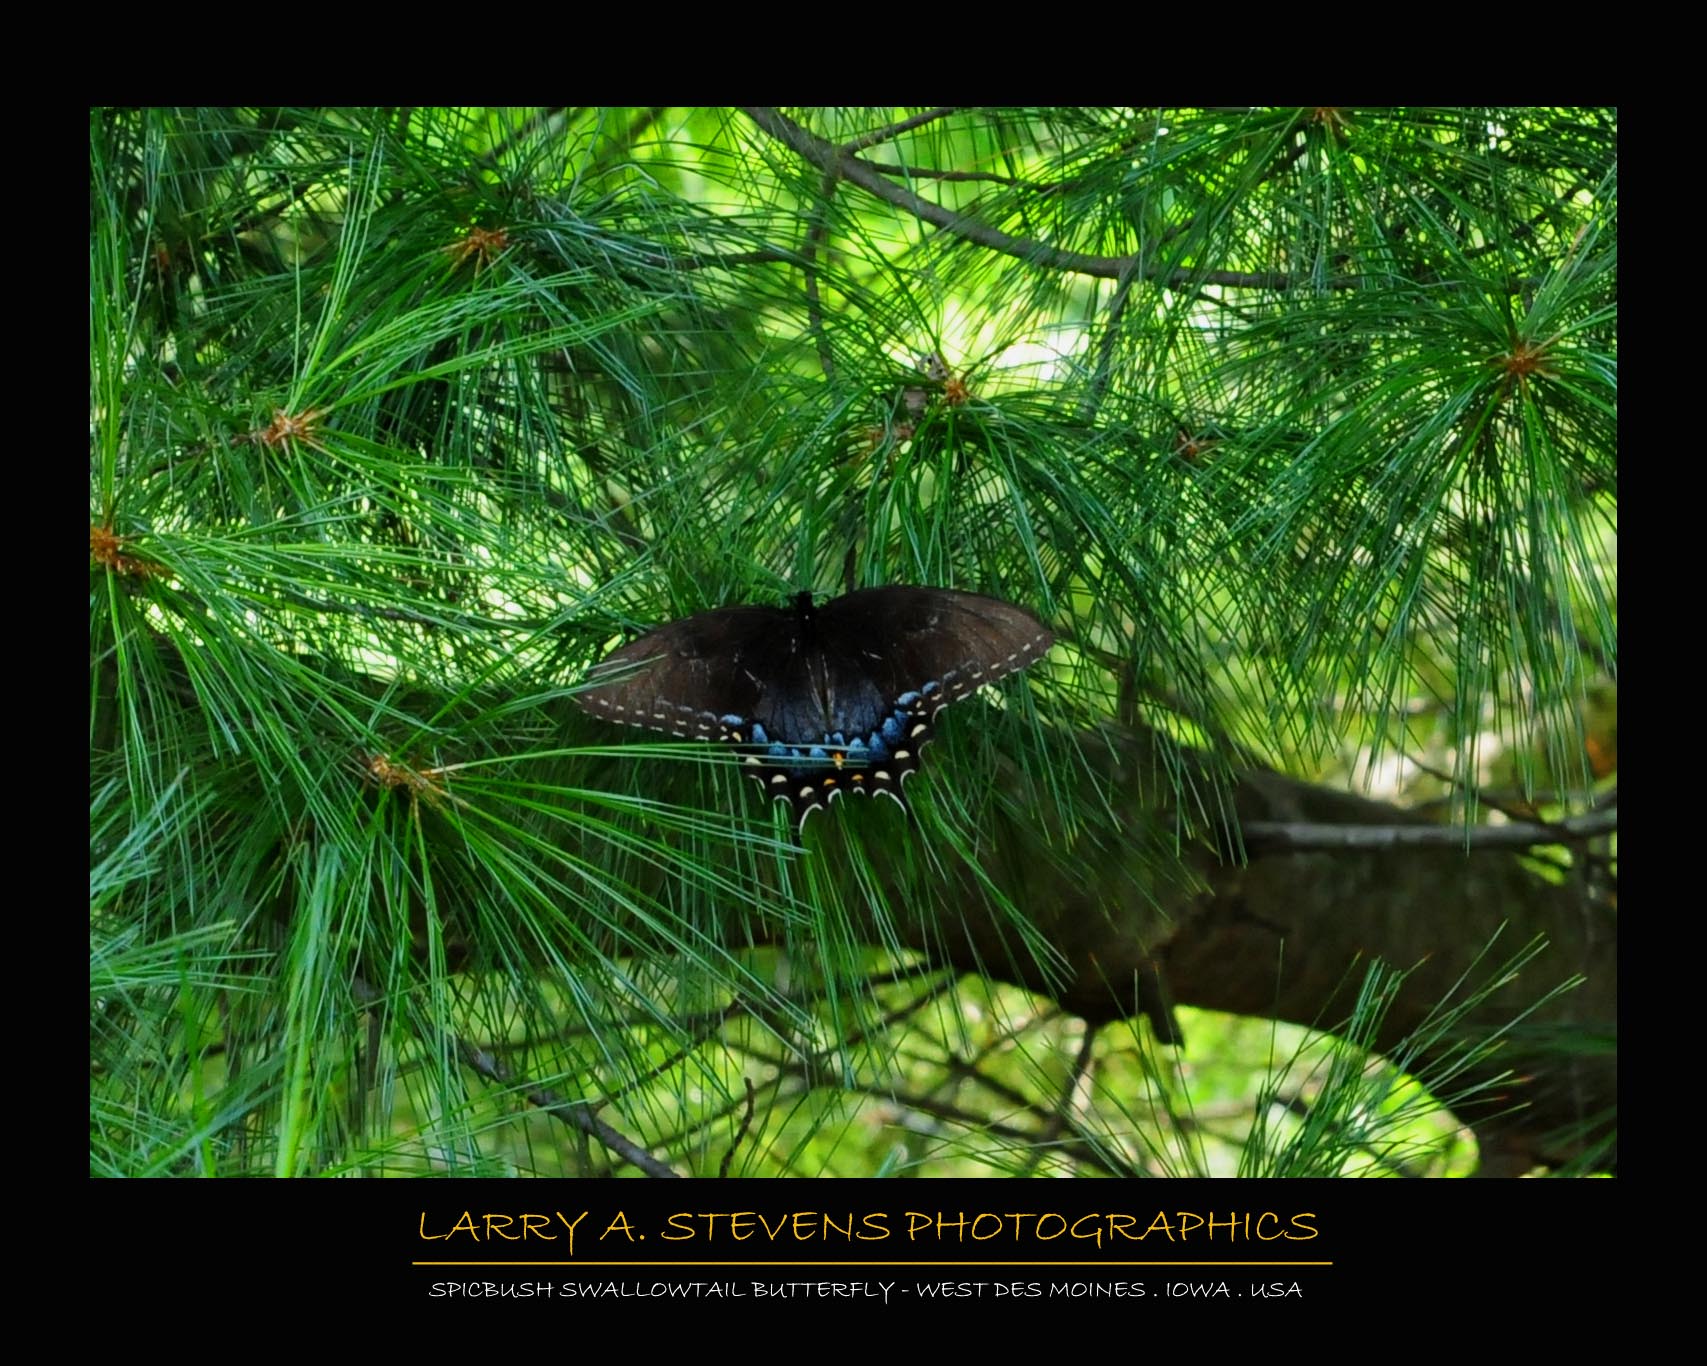 Butterfly - Spicebush Swallowtail